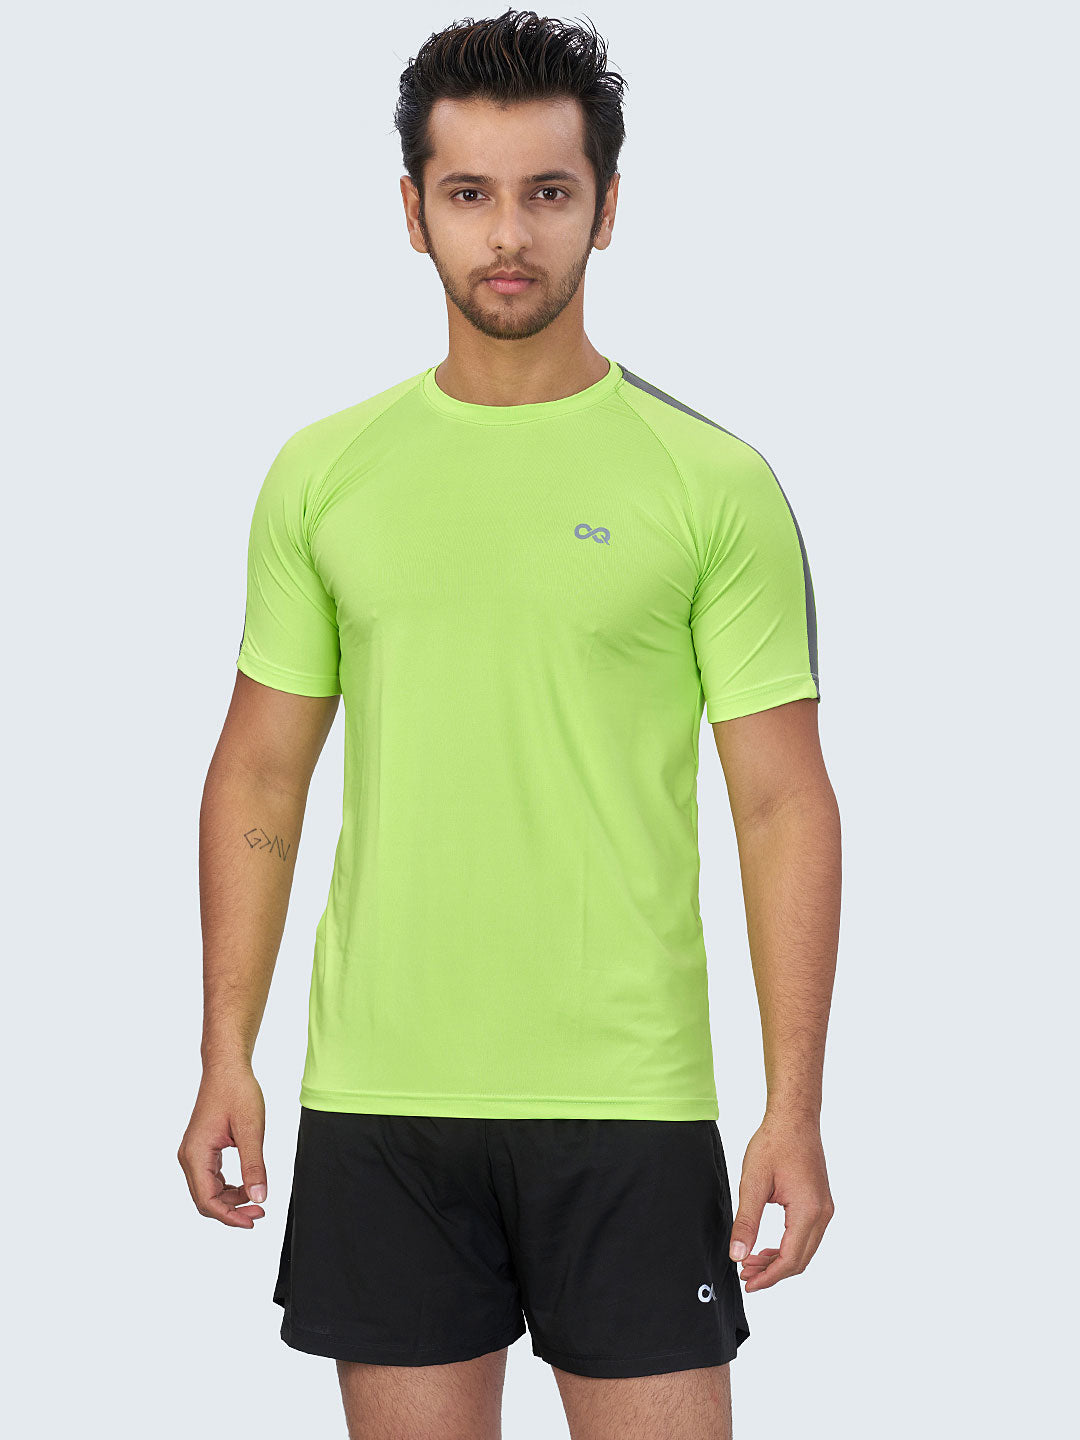 Men's Green Printed Round Neck Raglan Sports T-Shirt - 1982GN